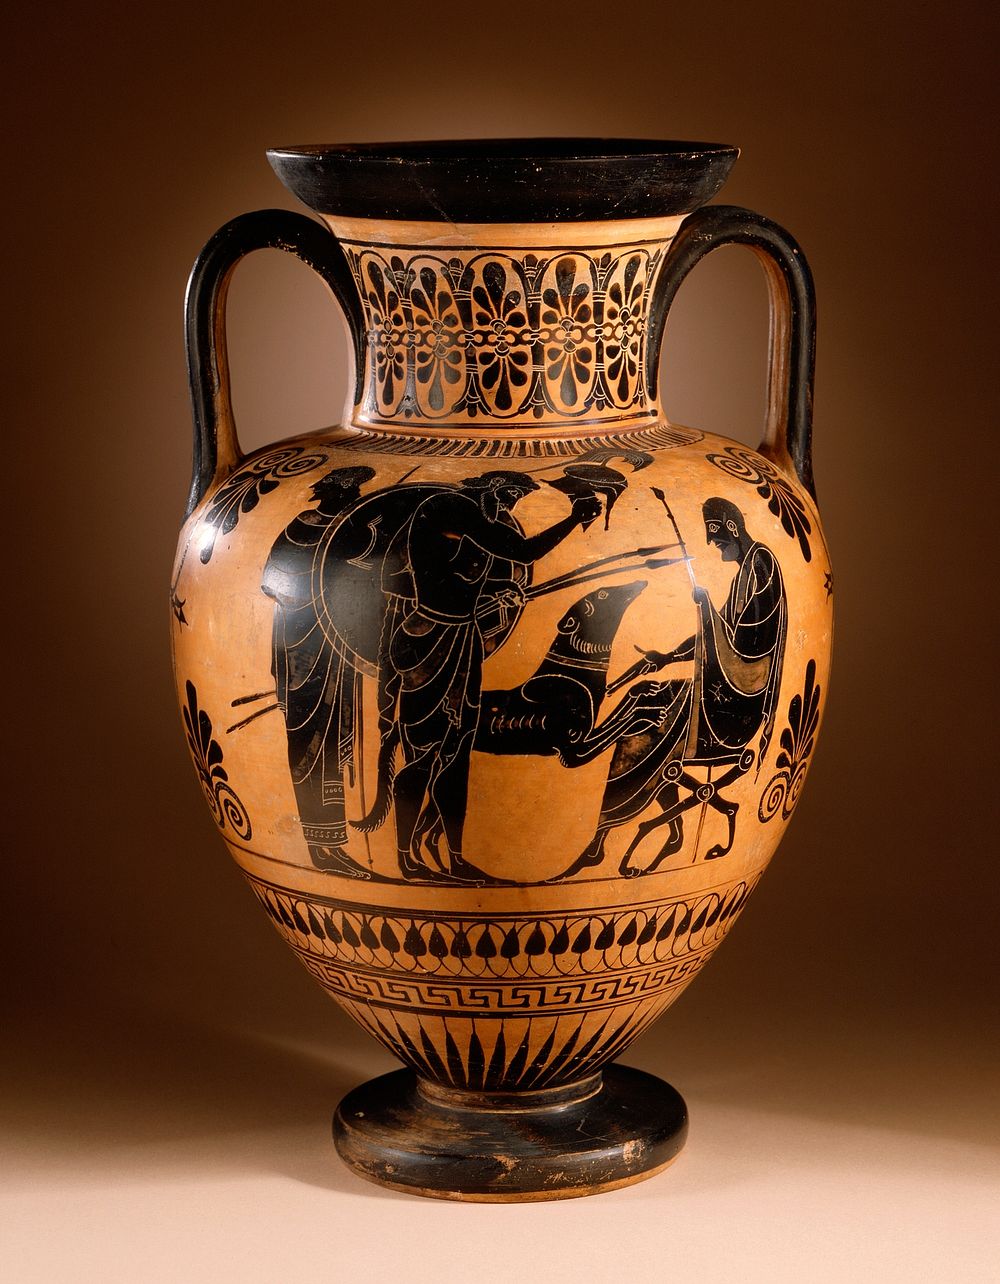 Neck-Amphora with Herakles and Kerberos by Edinburgh Painter